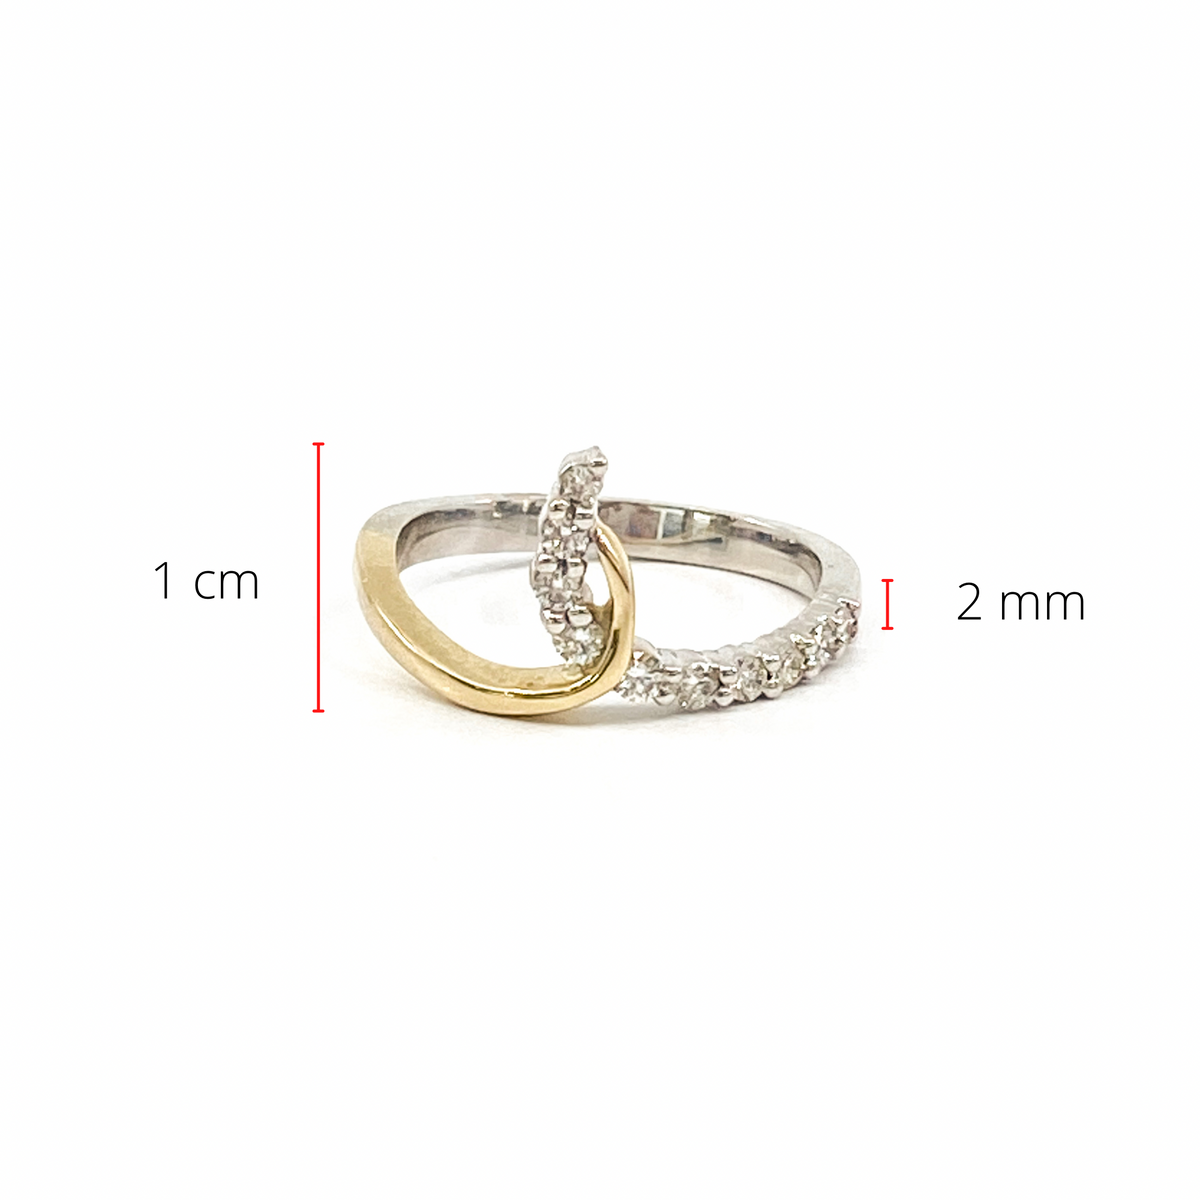 10K White &amp; Yellow Gold 0.25cttw Diamond Ring, size 6.5